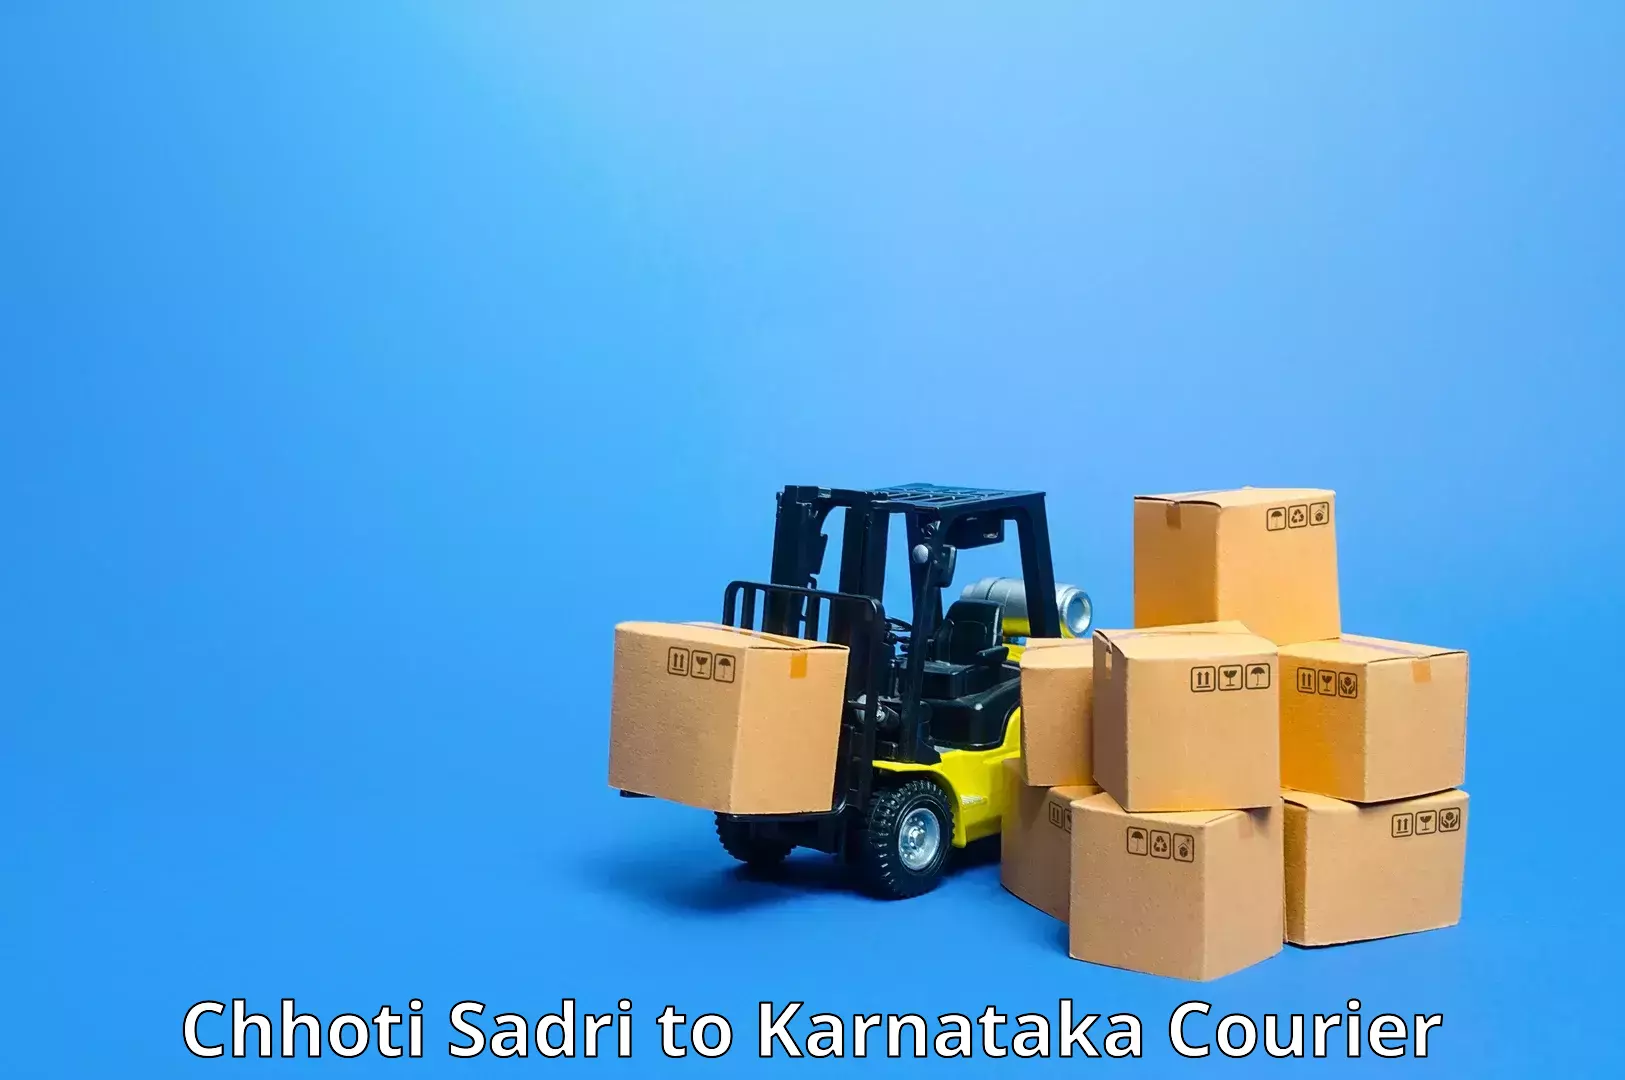 International courier networks Chhoti Sadri to Karnataka